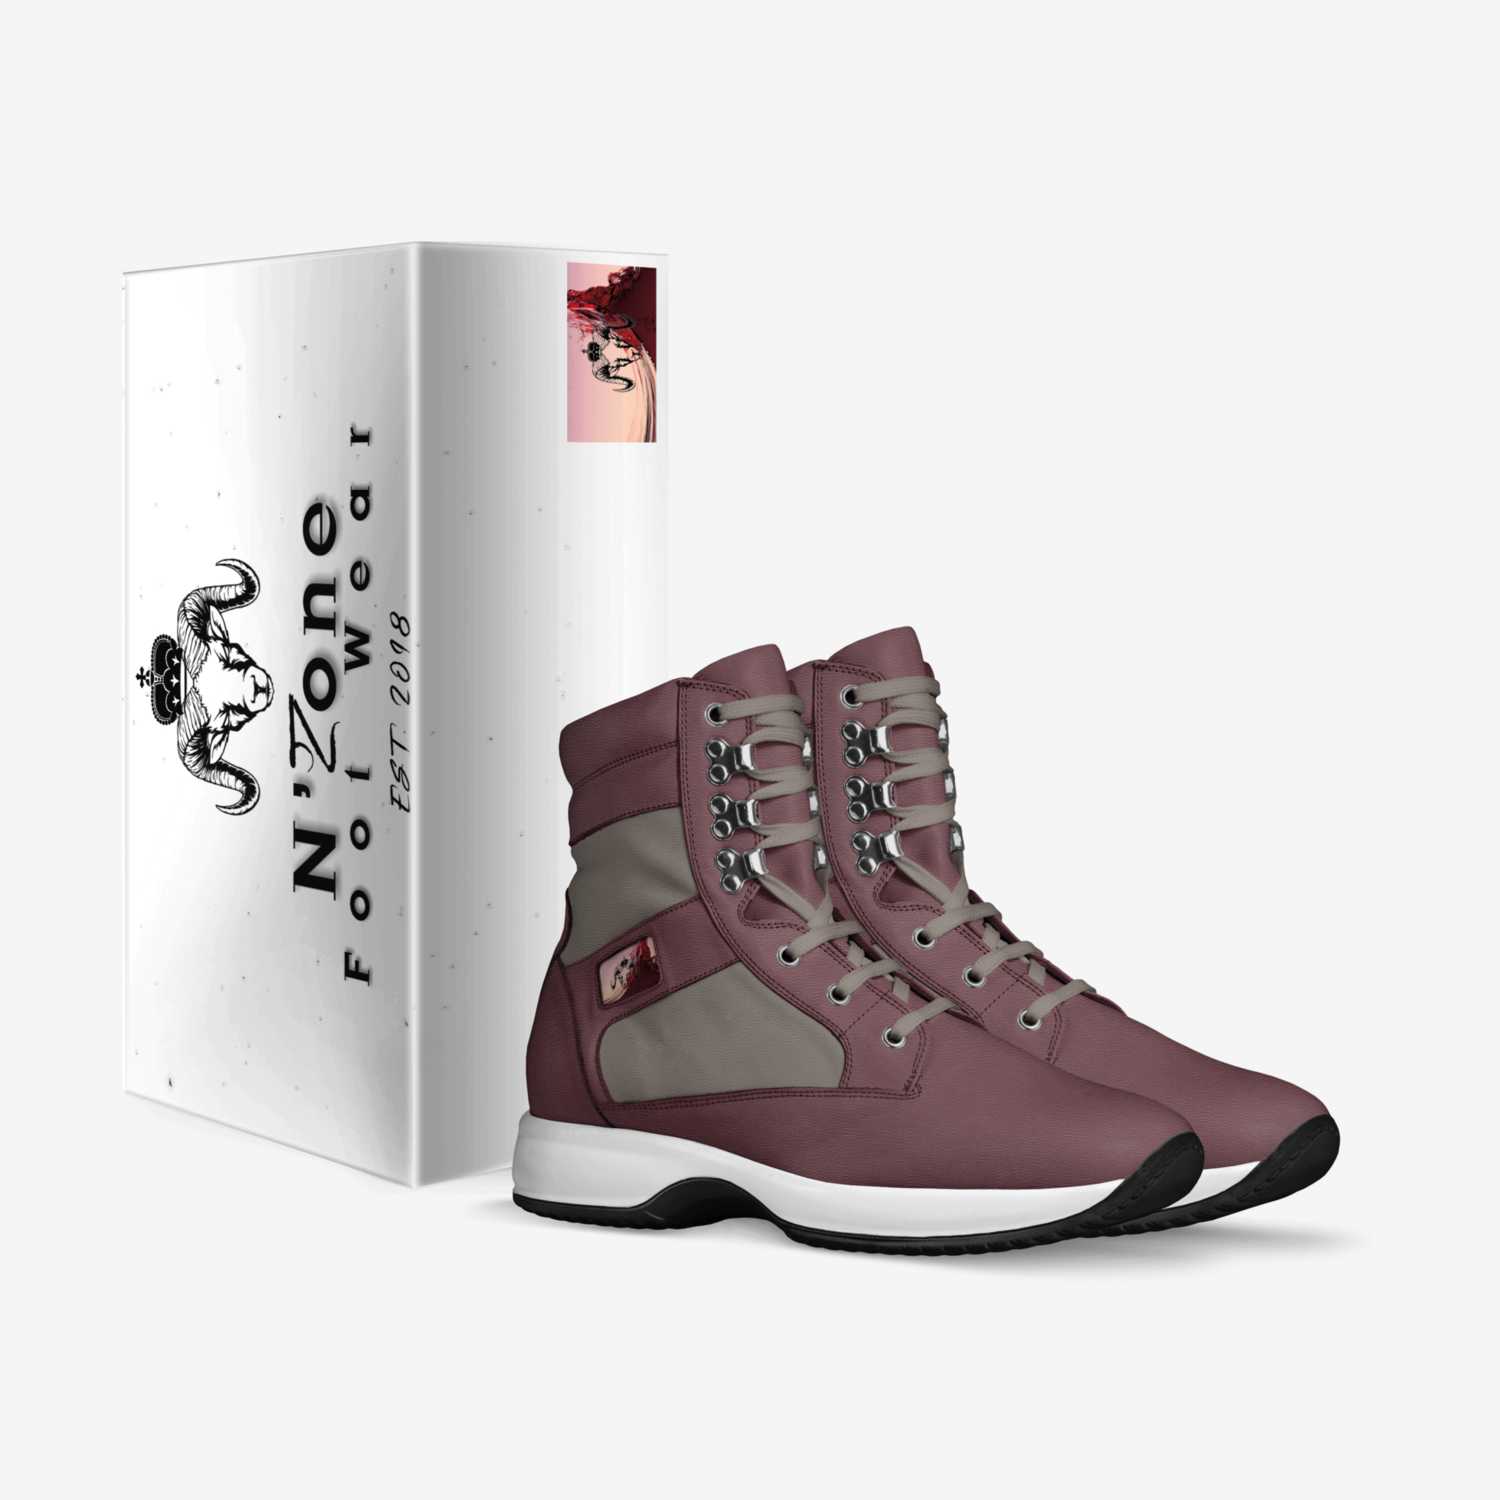 N'Zone Footwear custom made in Italy shoes by Narada vanegas | Box view